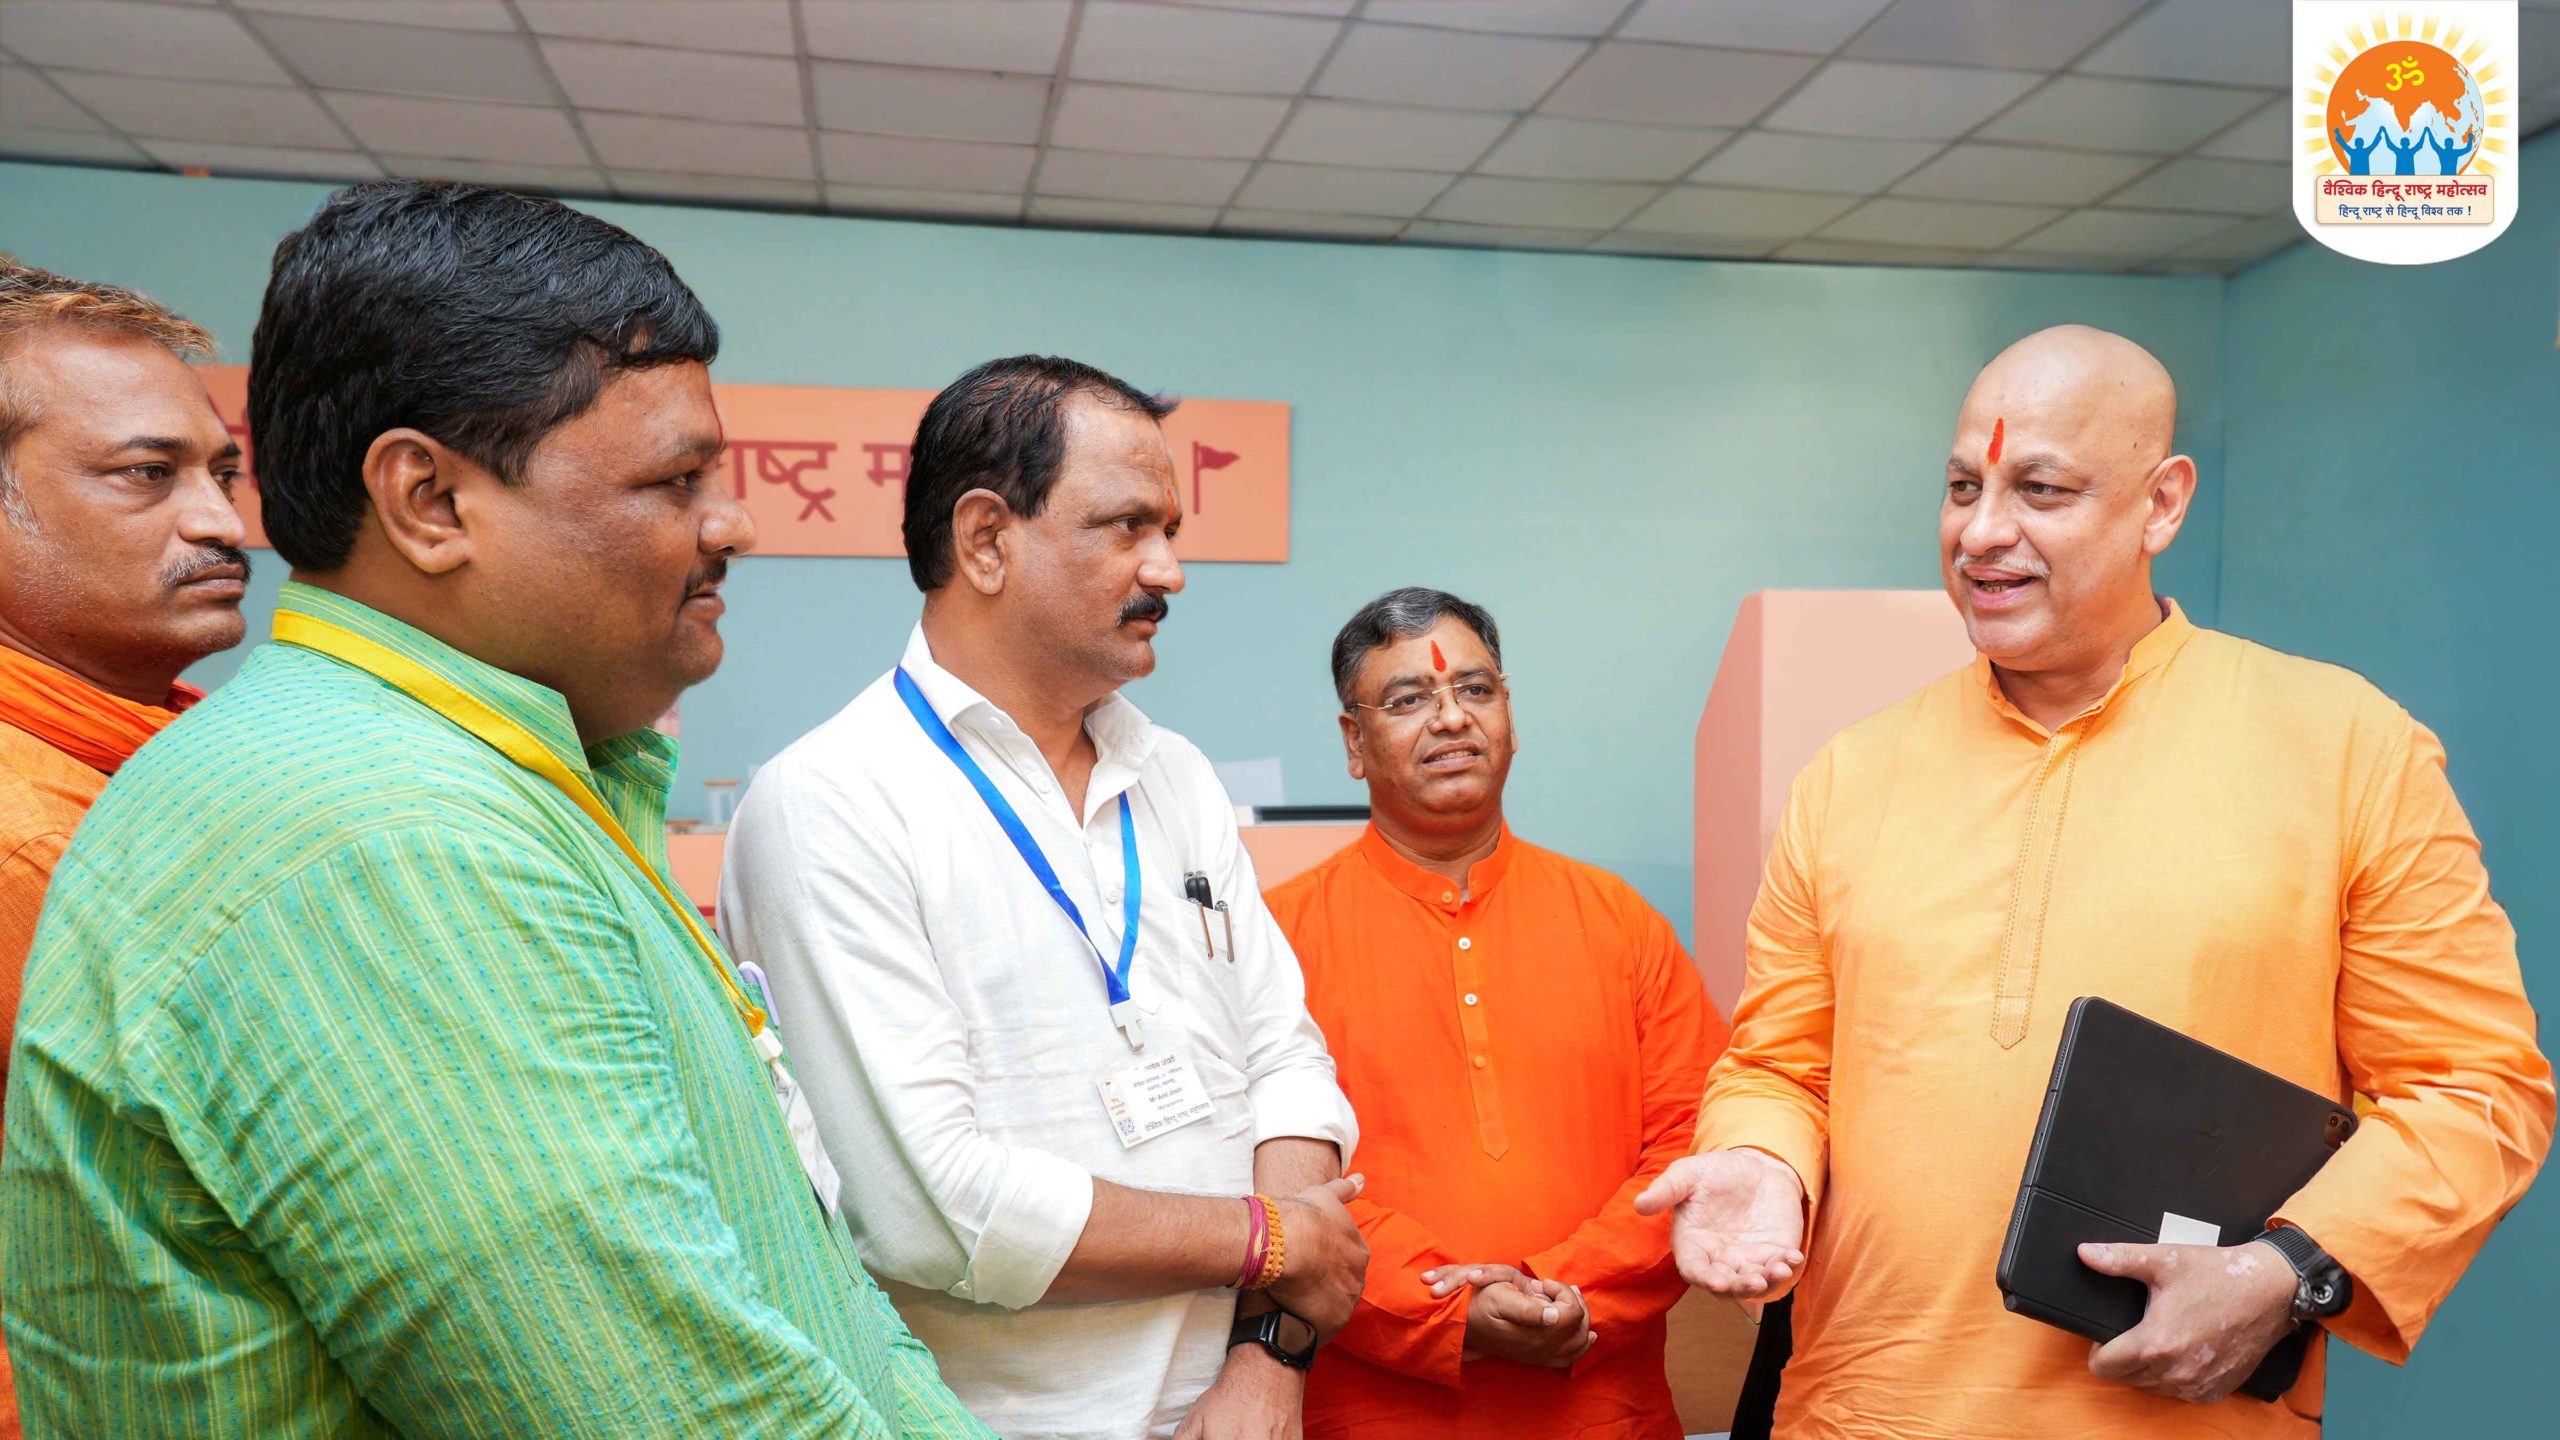 Captain Praveen Chaturvedi (Founder & CEO, Prachyam, Varanasi, Uttar Pradesh) (Extreme left) interacting with Devout Hindus